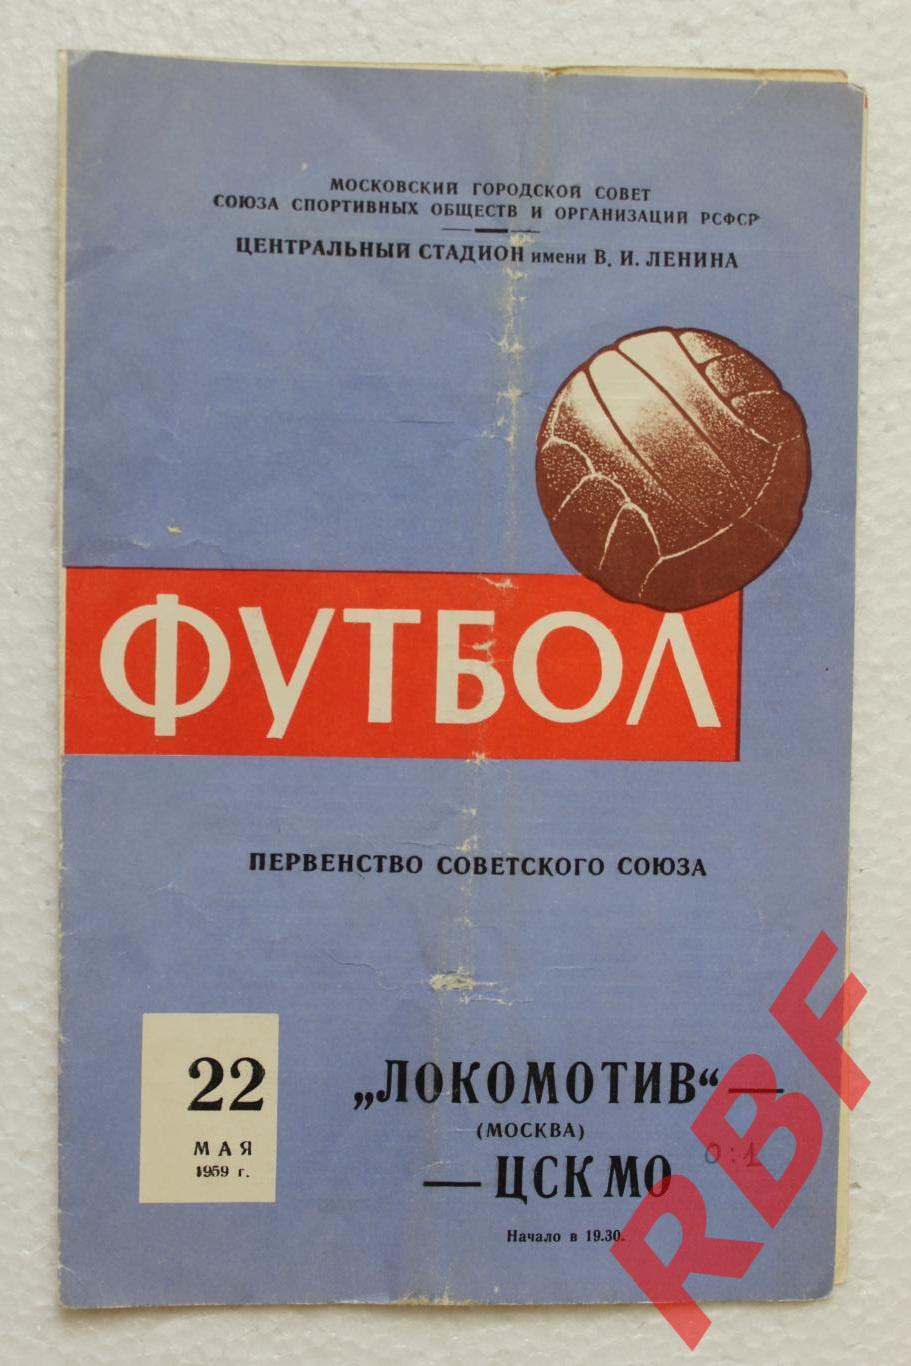 Локомотив Москва - ЦСКА МО,22 мая 1959